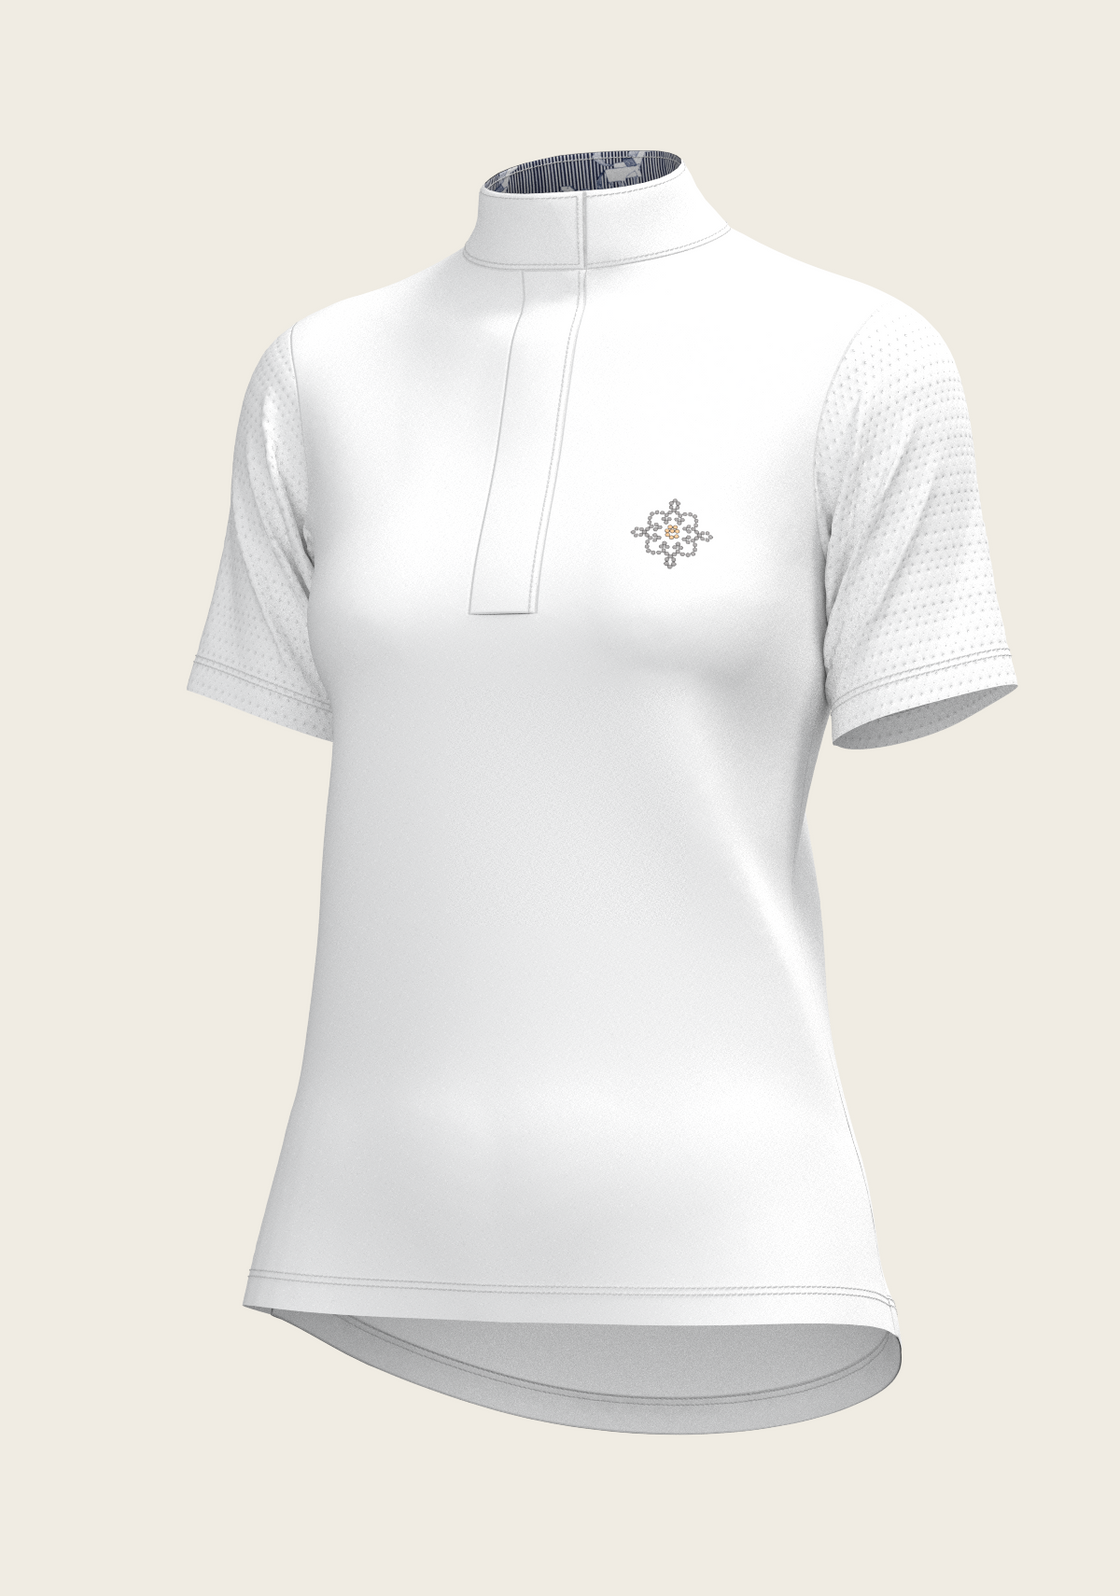 PRE ORDER • White with Navy Stripes Inner Details Short Sleeve Show Shirt